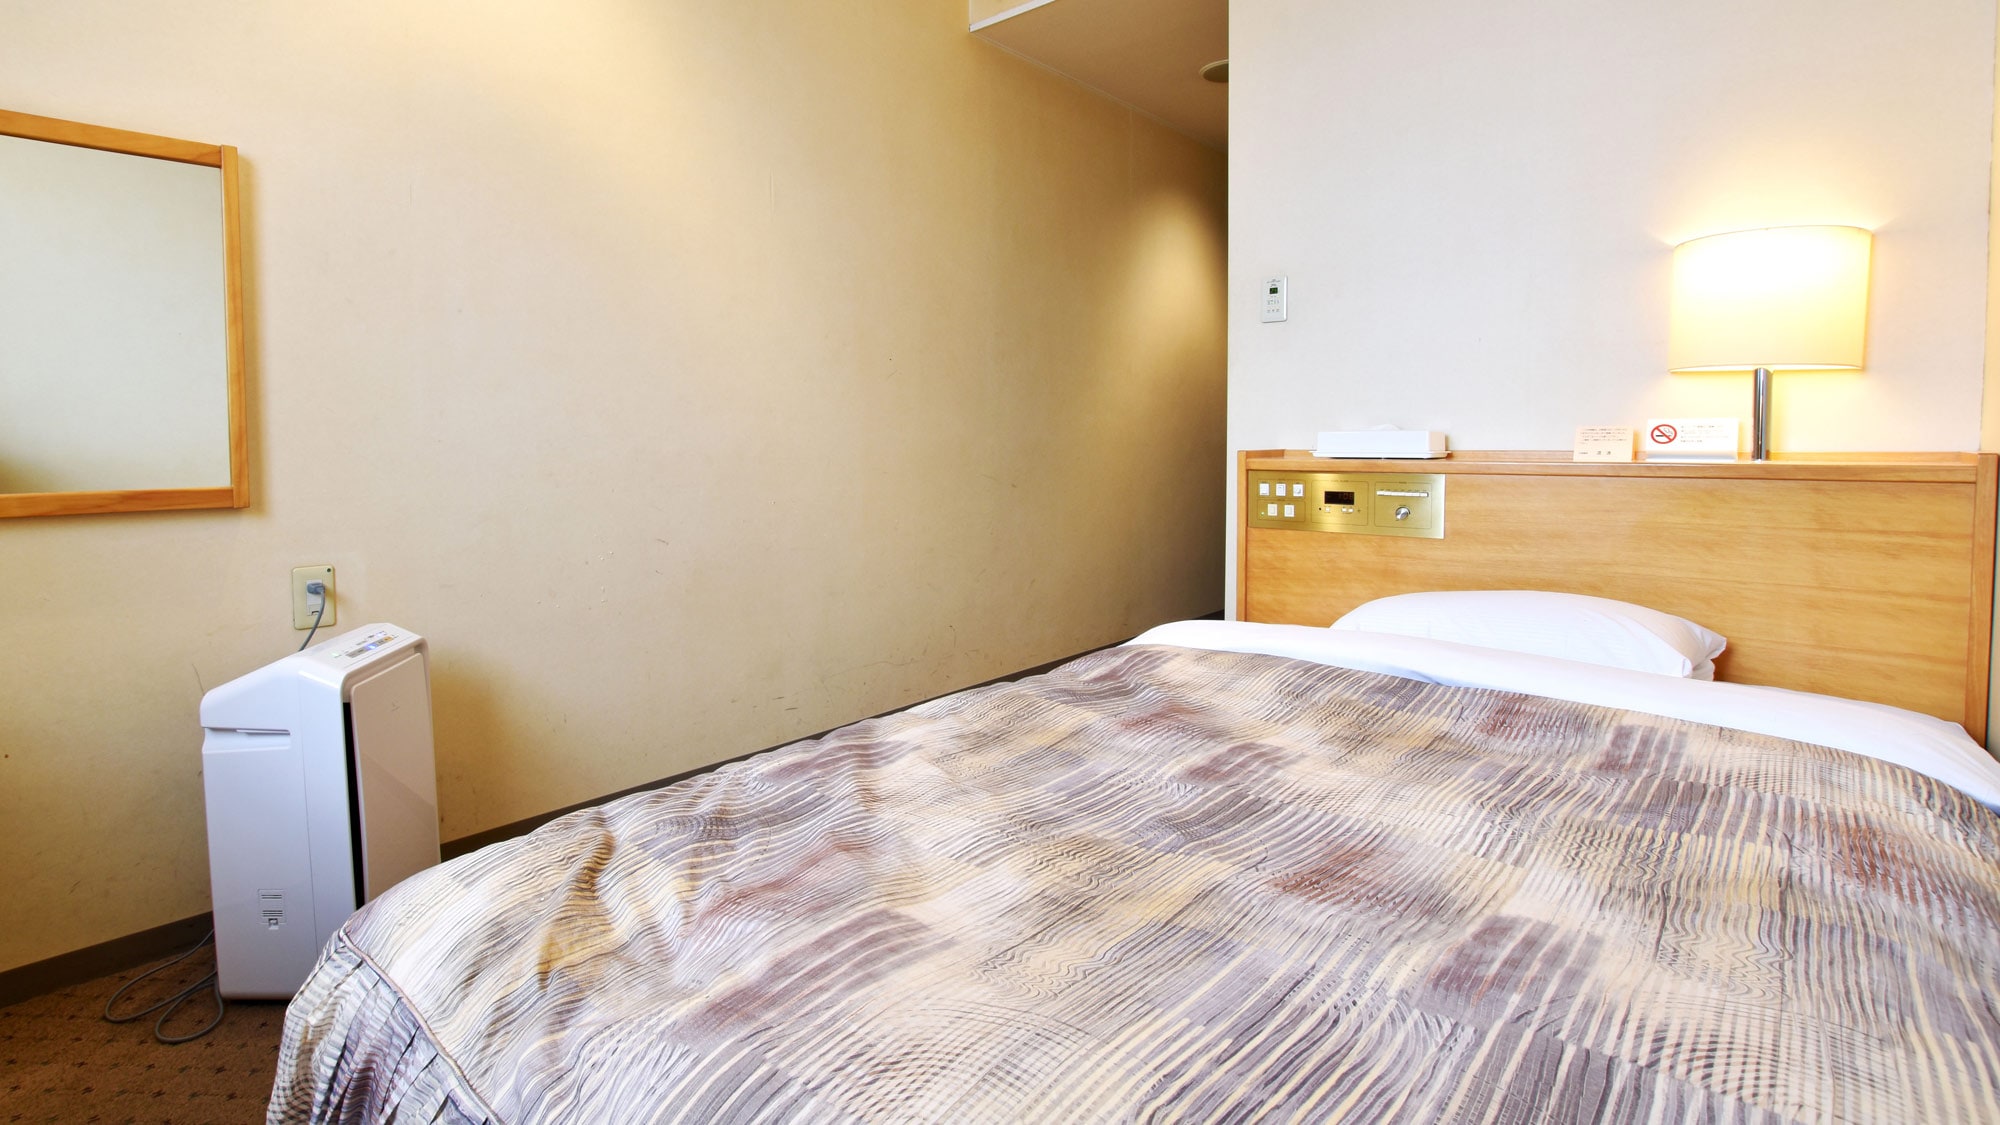 [Single room] ☆ Bed width 120 cm. It is a simple room.